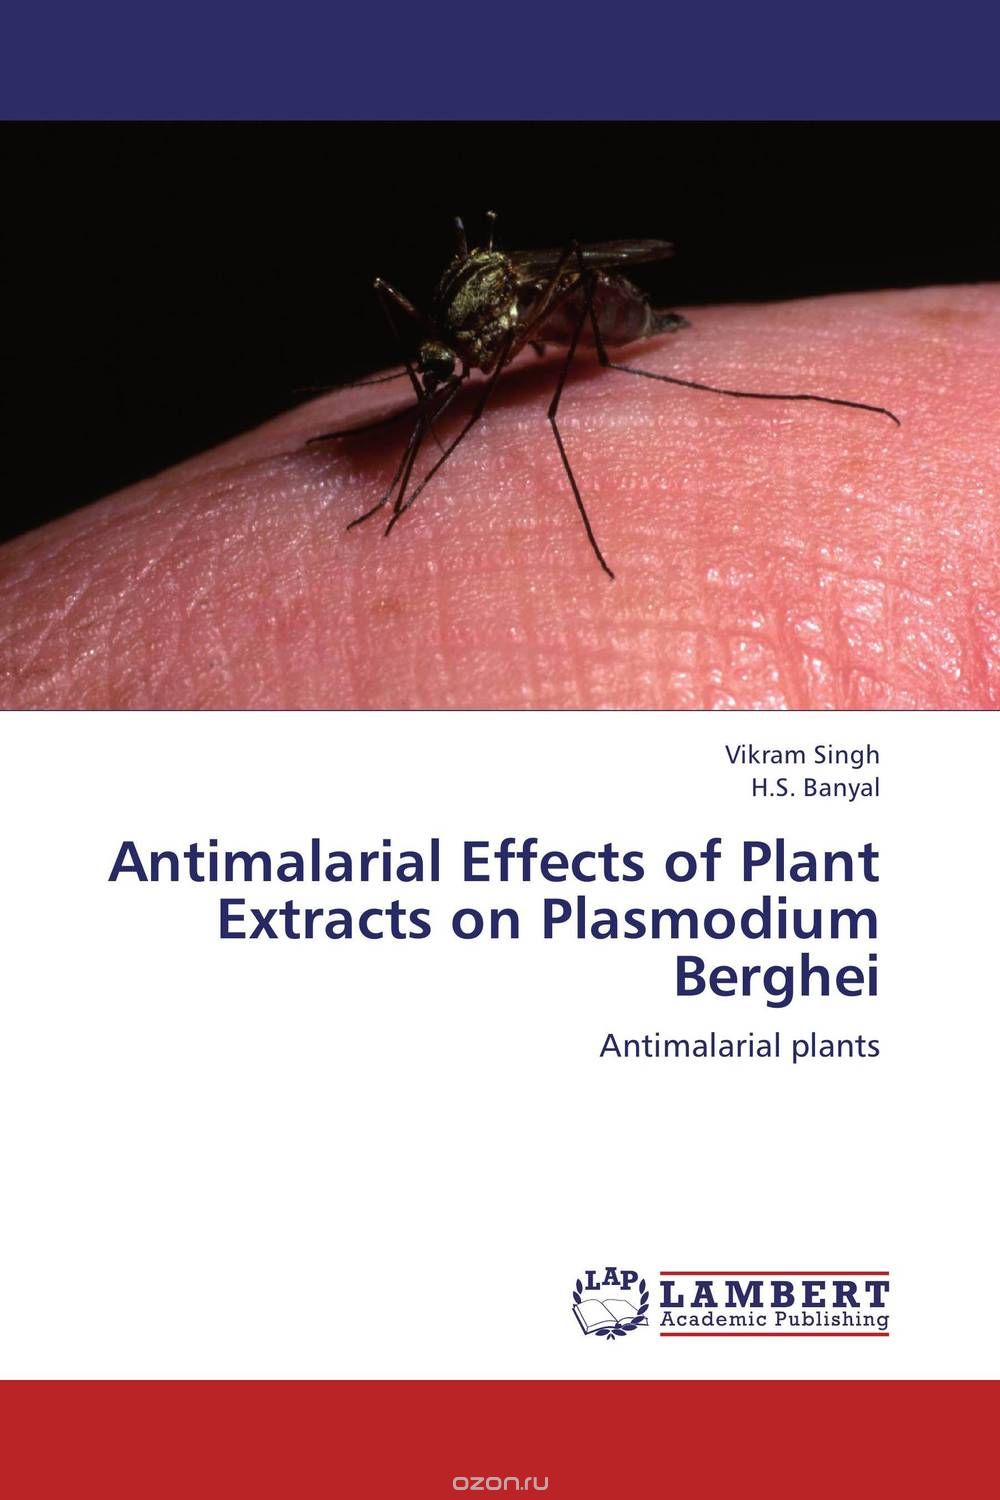 Скачать книгу "Antimalarial Effects of Plant Extracts on Plasmodium Berghei"